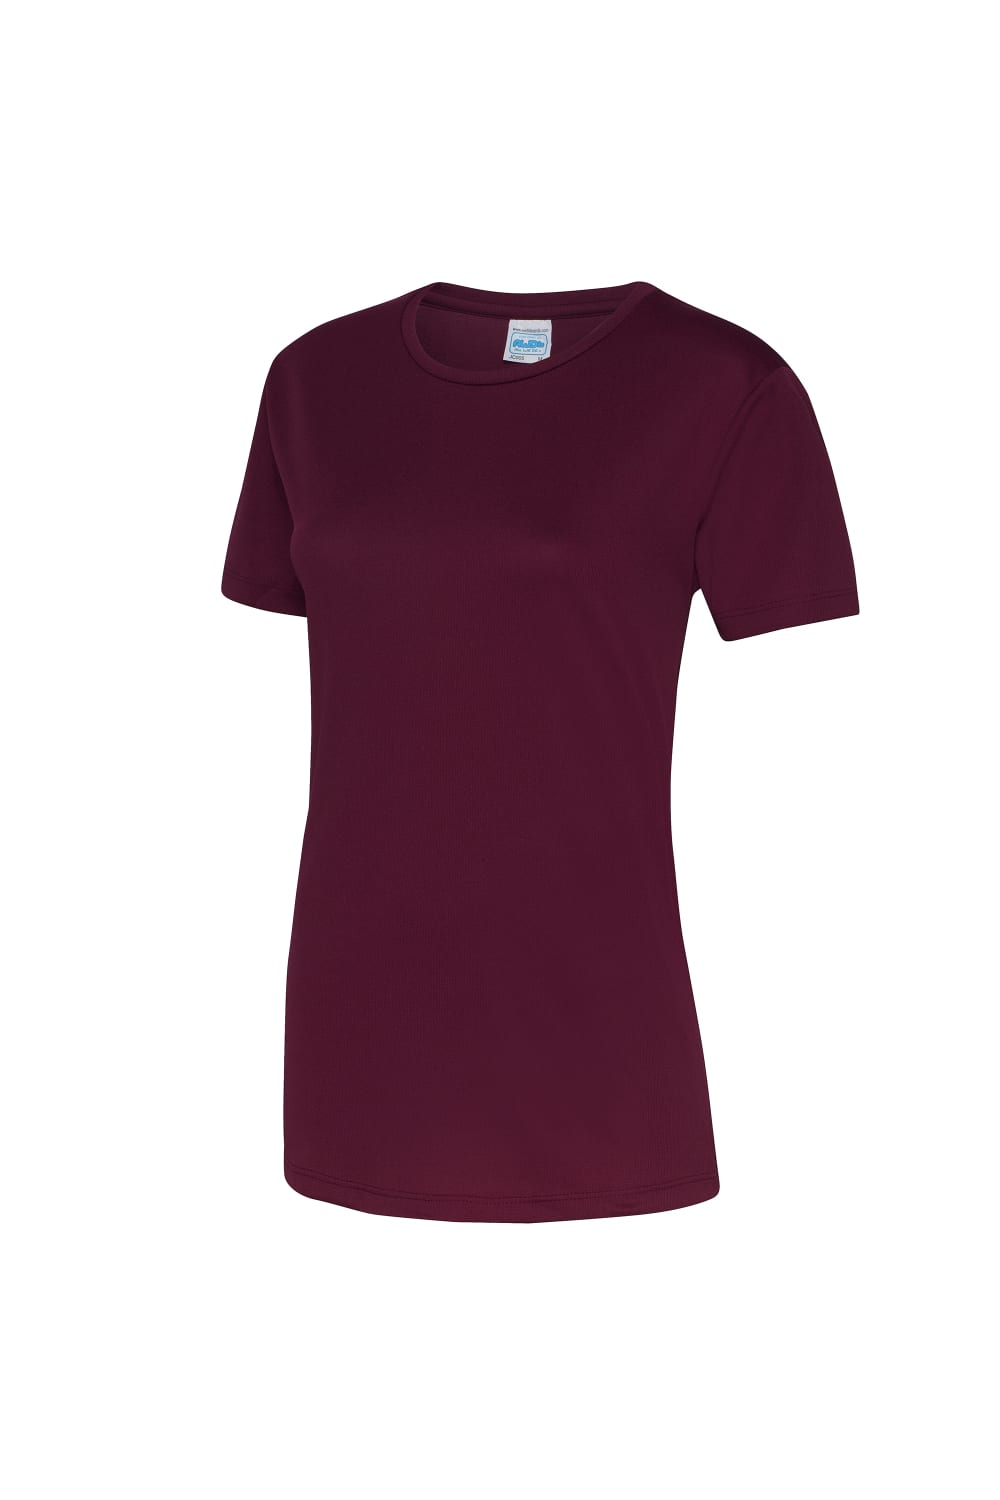 Just Cool Womens/Ladies Sports Plain T-Shirt - Burgundy